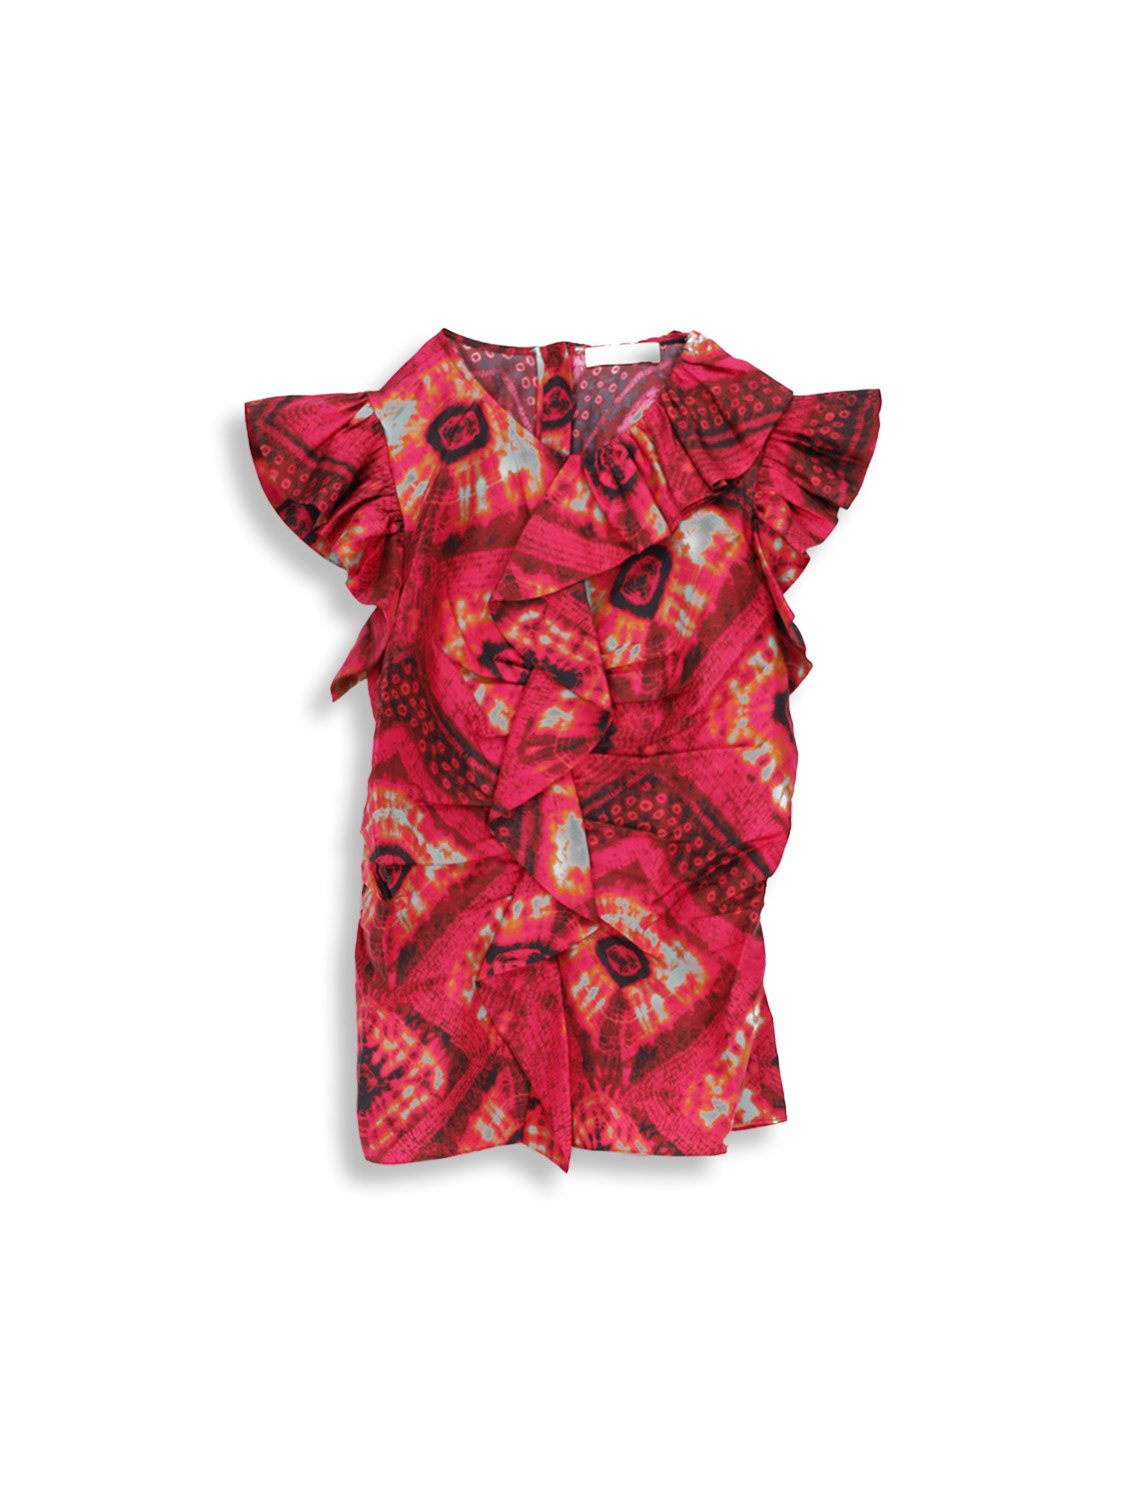 Vida - blouse top with ruffles and asymmetrical cut